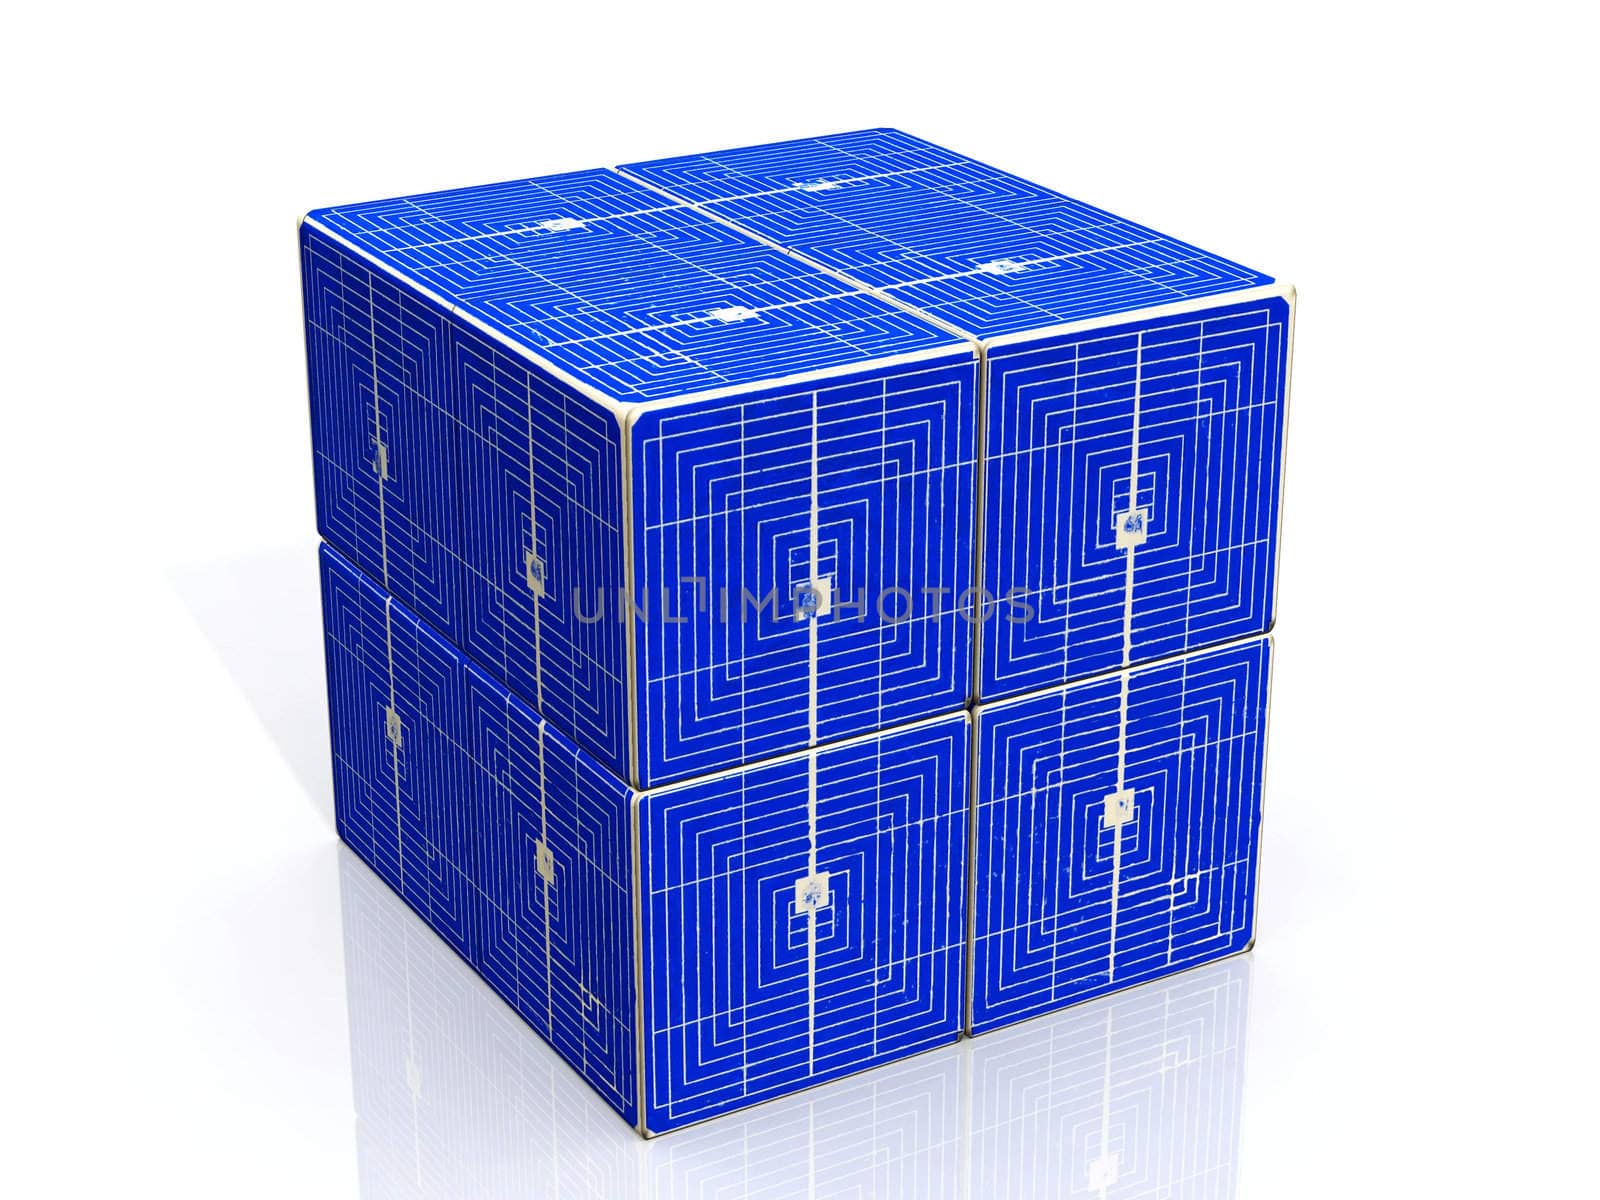 solar cell cube by njaj